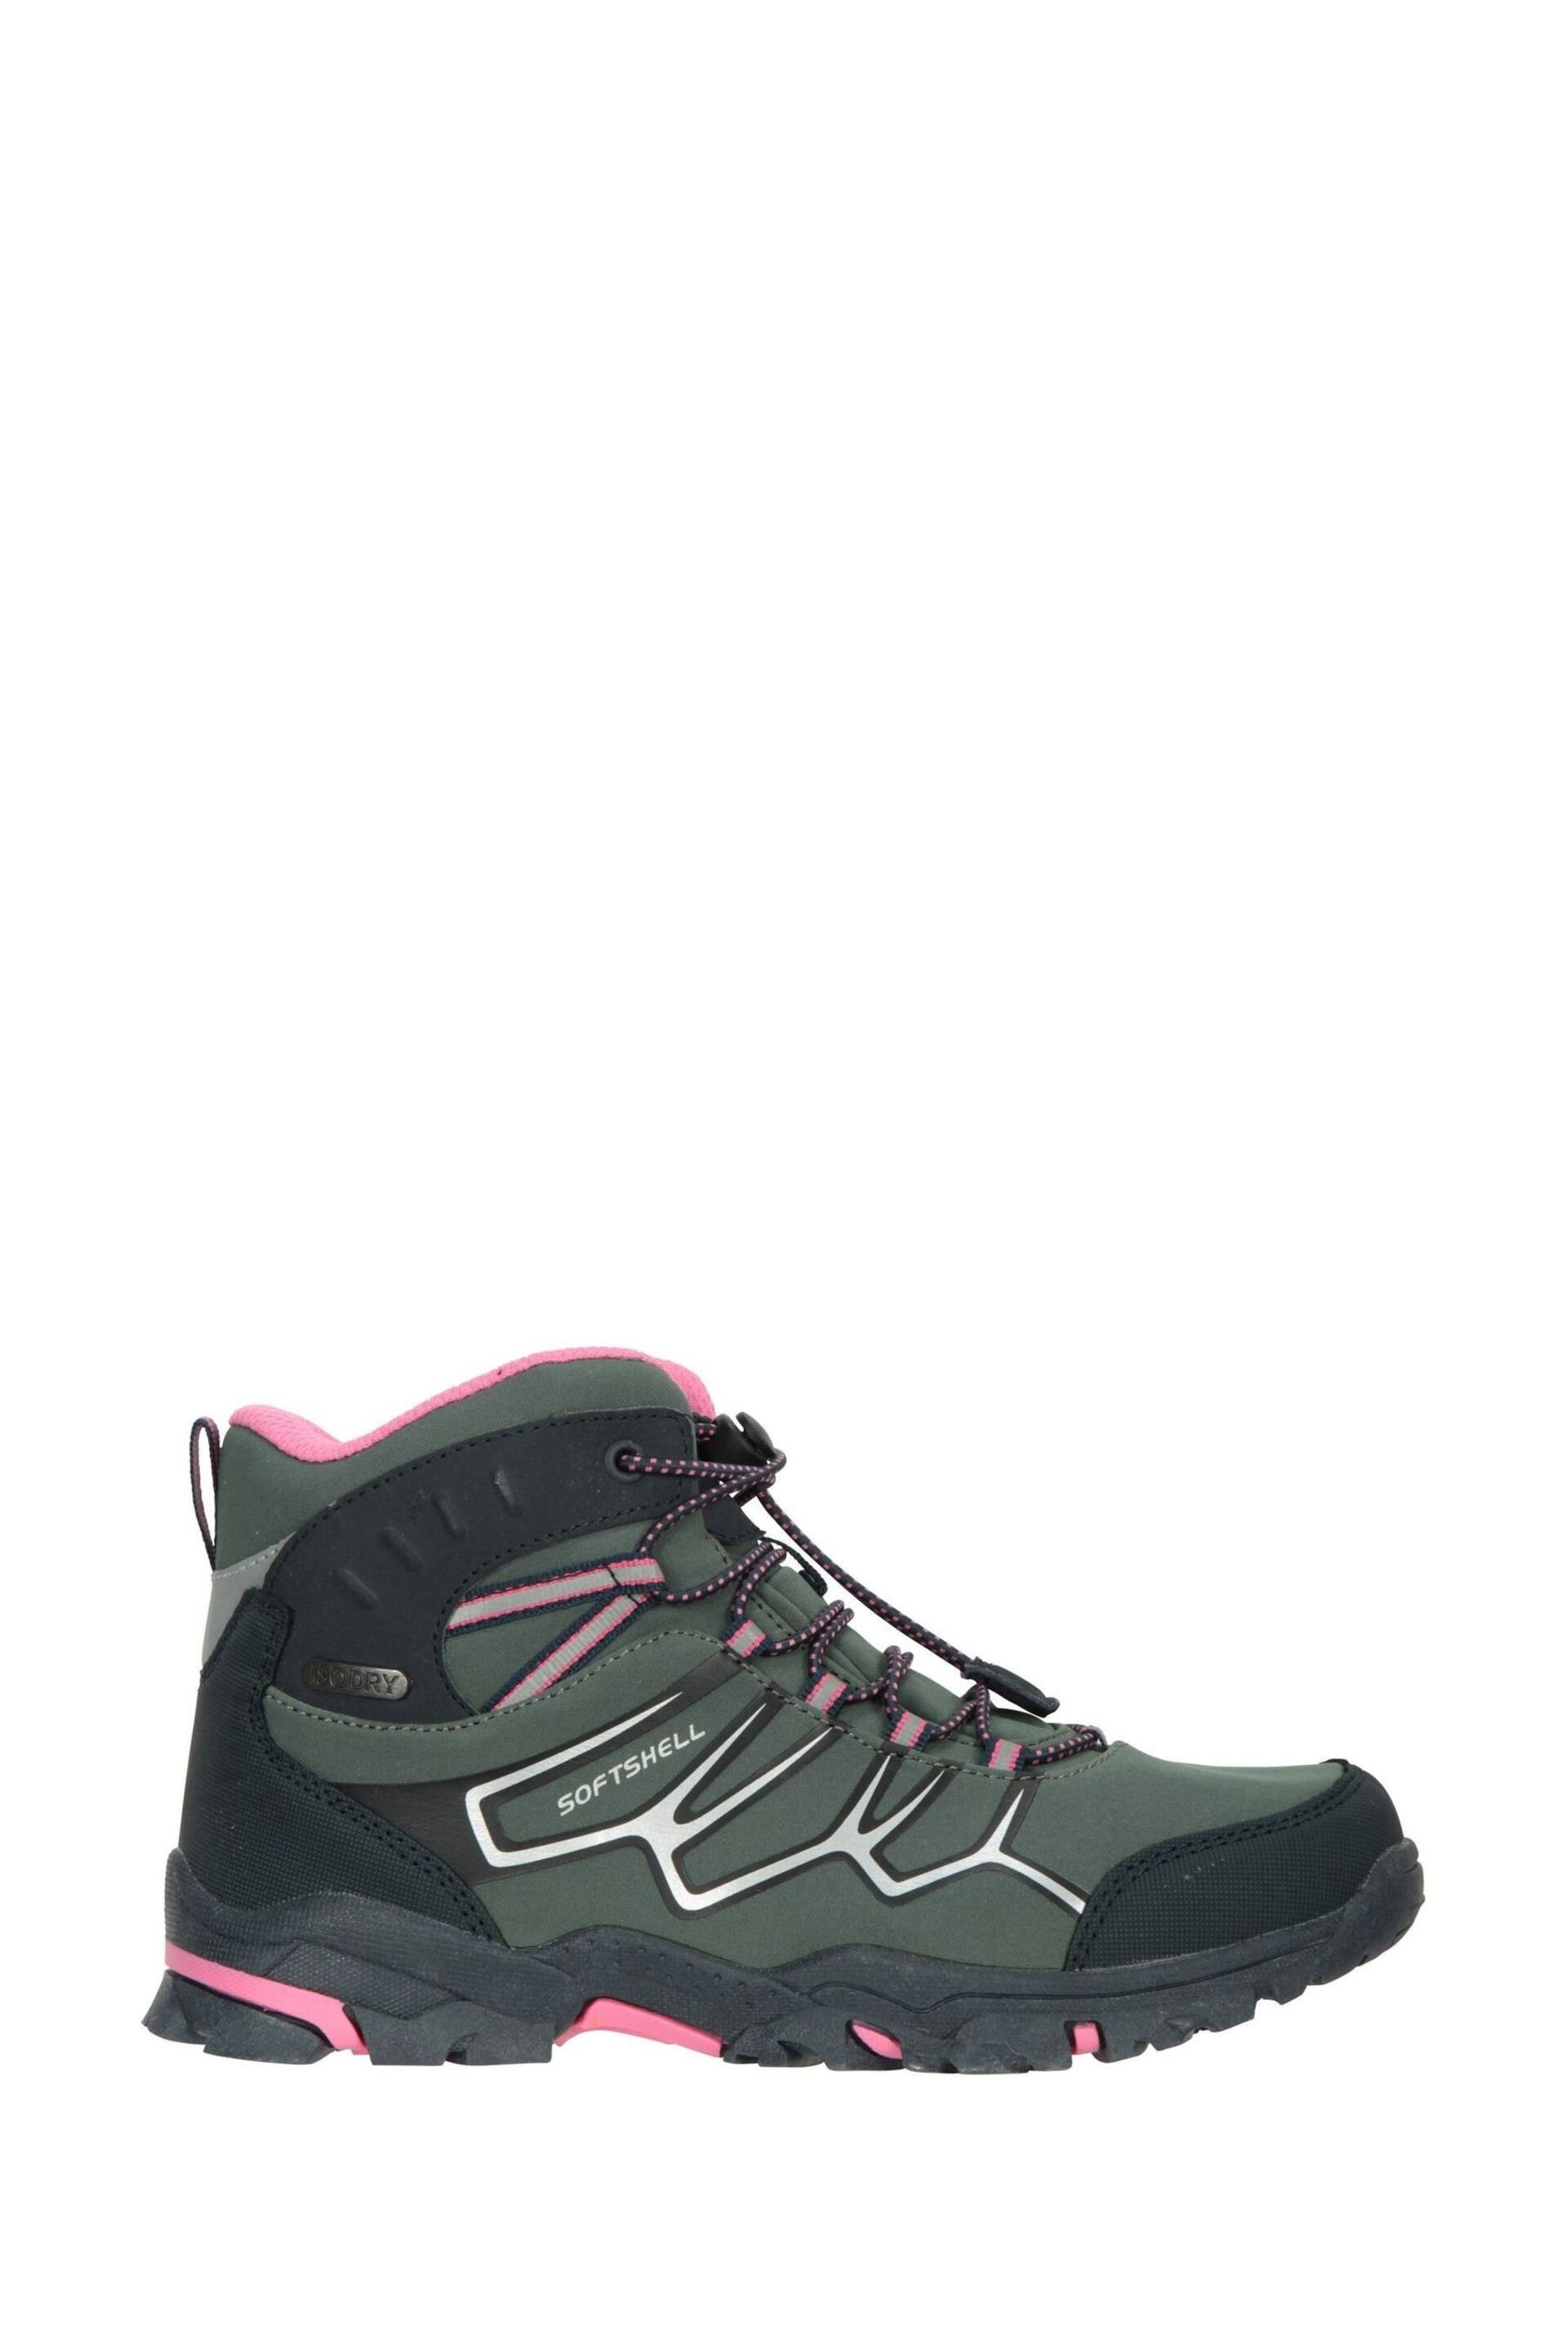 Mountain Warehouse Green Kids Softshell Walking Boots - Image 2 of 5